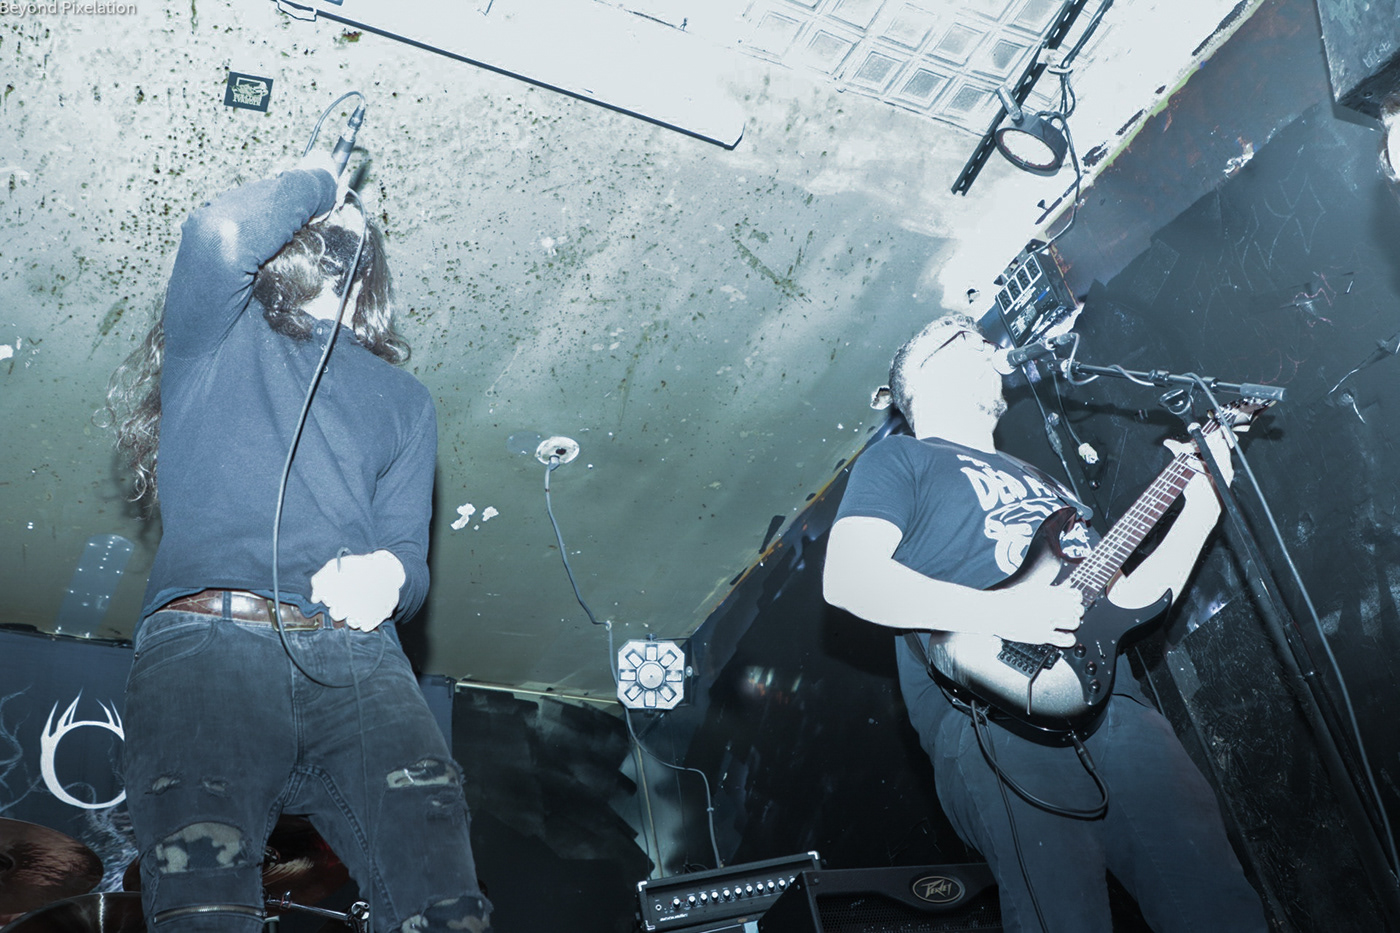 Cleveland Deathmetal DIY DIYmusic livemusic ohio punkrock